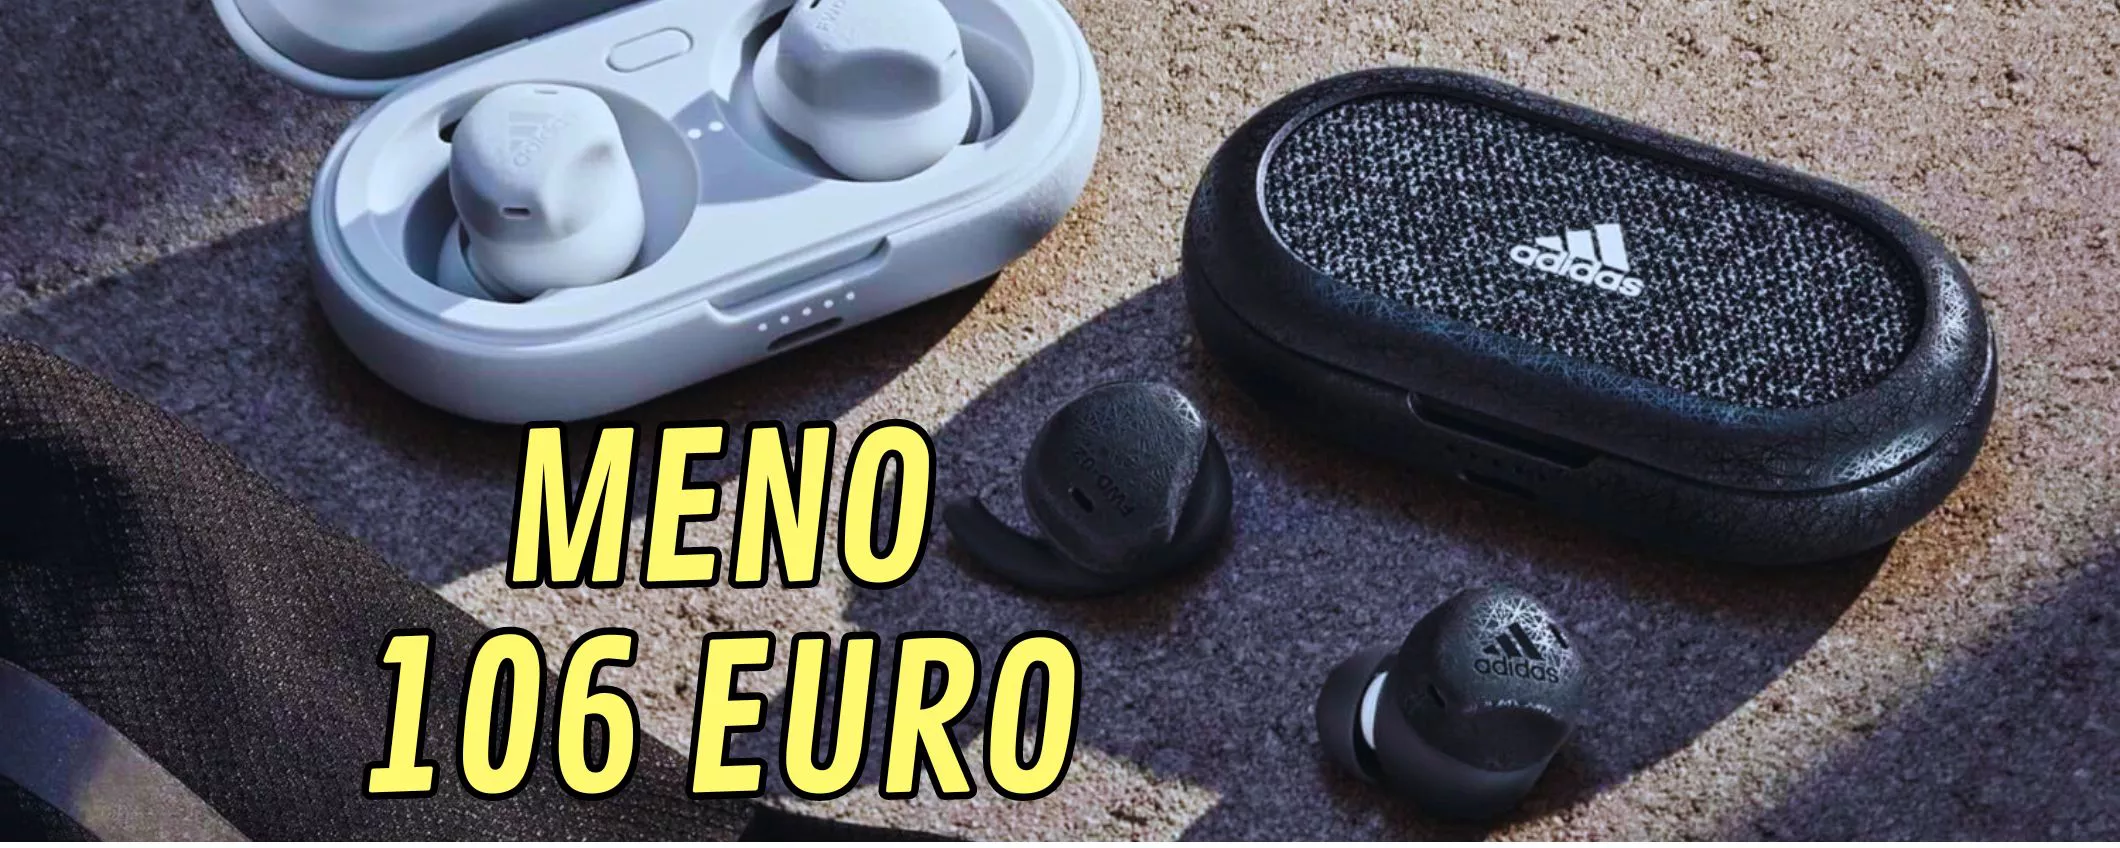 ADIDAS: Auricolari Bluetooth Wireless Premium al minimo storico MENO 106 euro